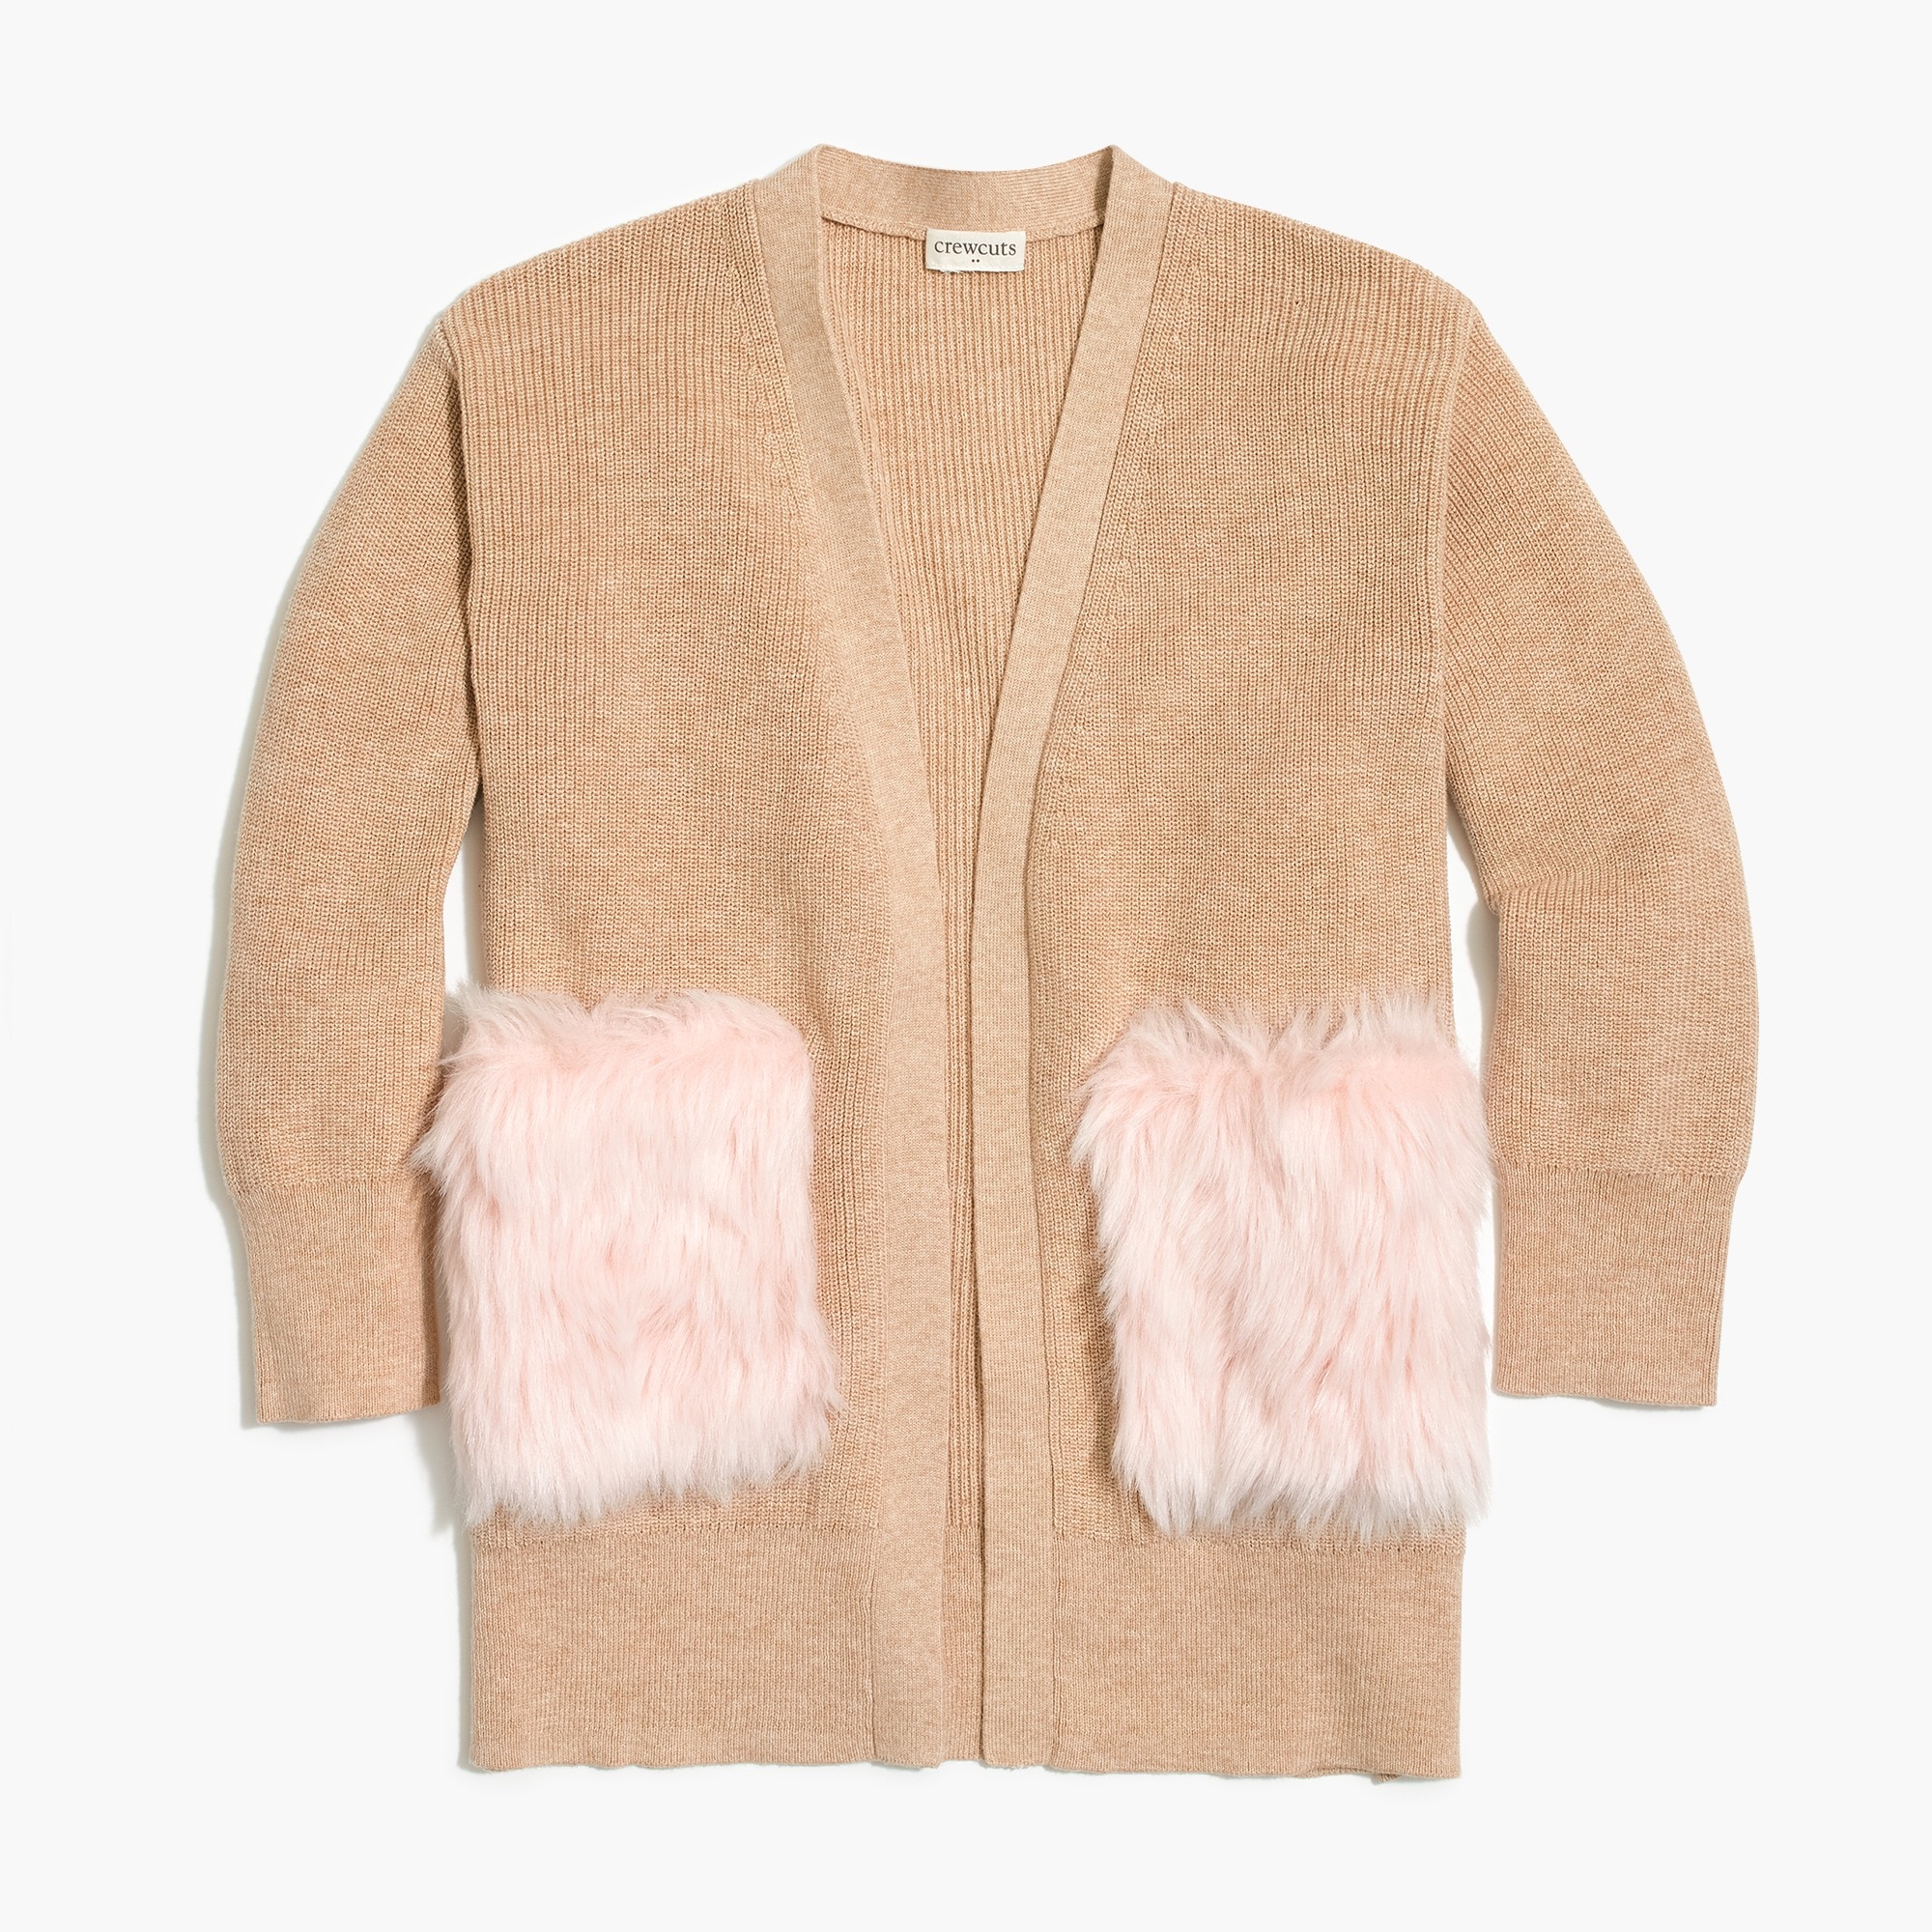 JCrew Factory Girls’ long cardigan sweater with fur pockets $25